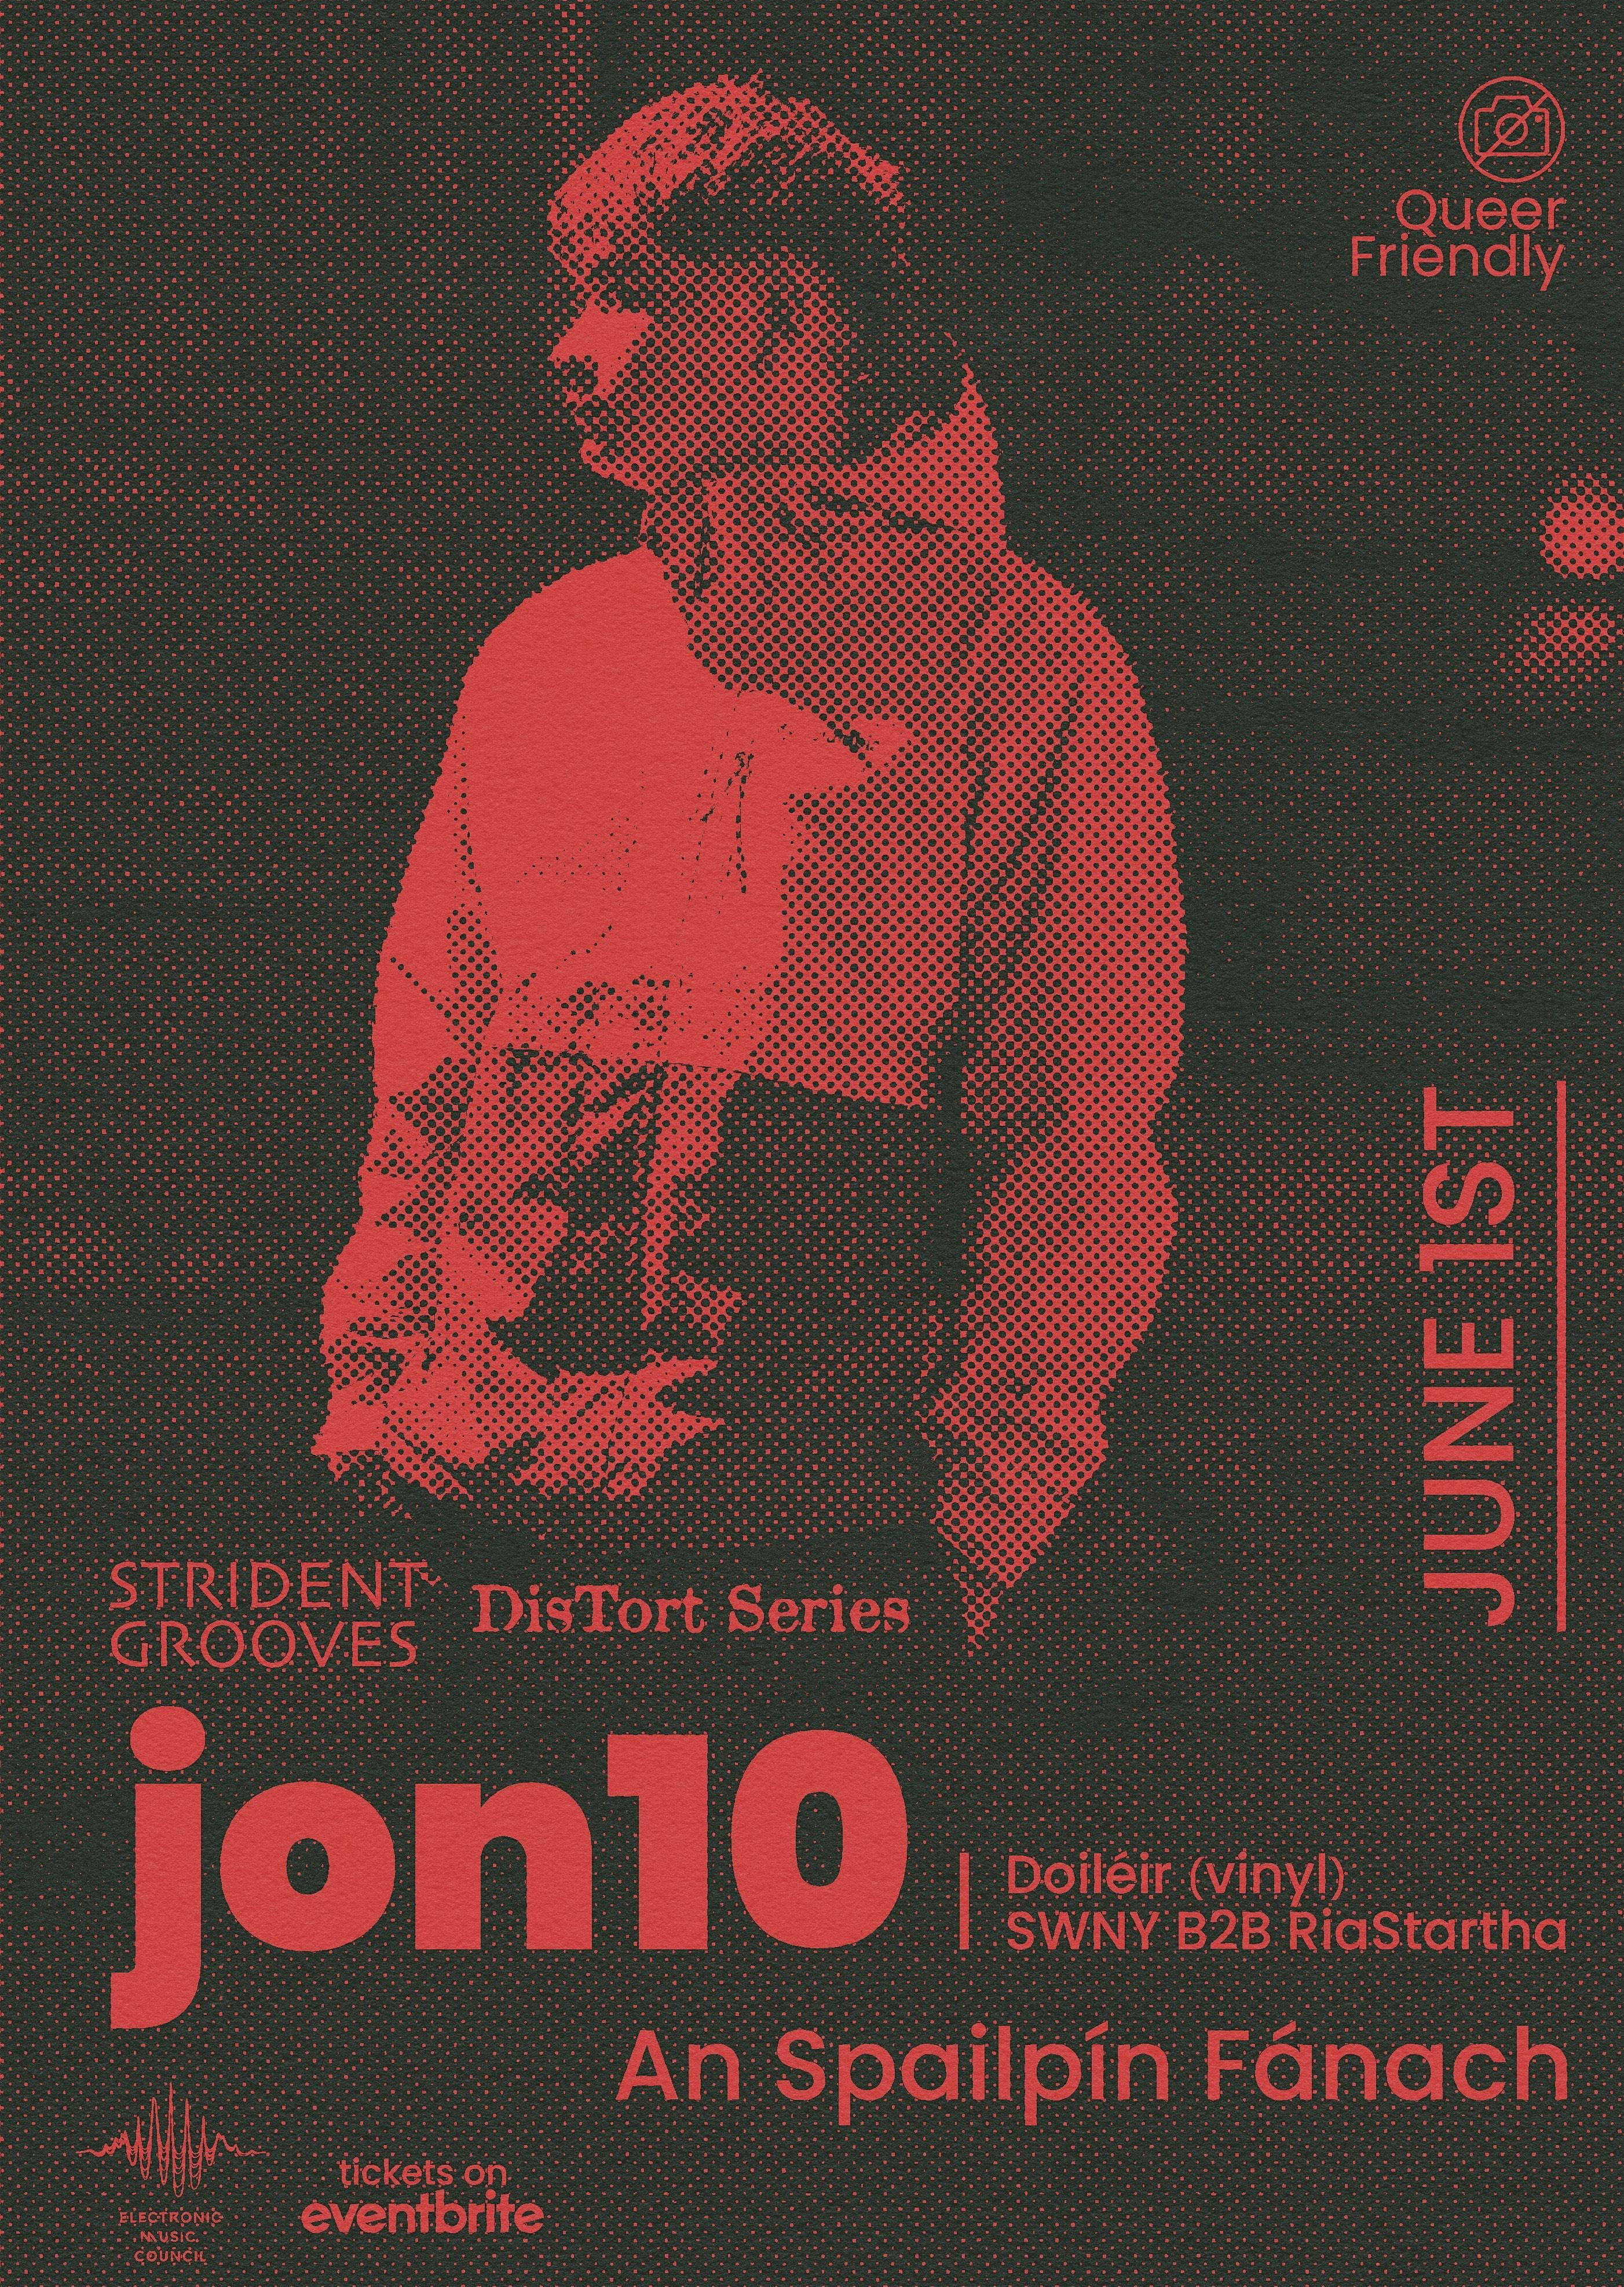 Strident Grooves X Distort Series Presents: Jon10